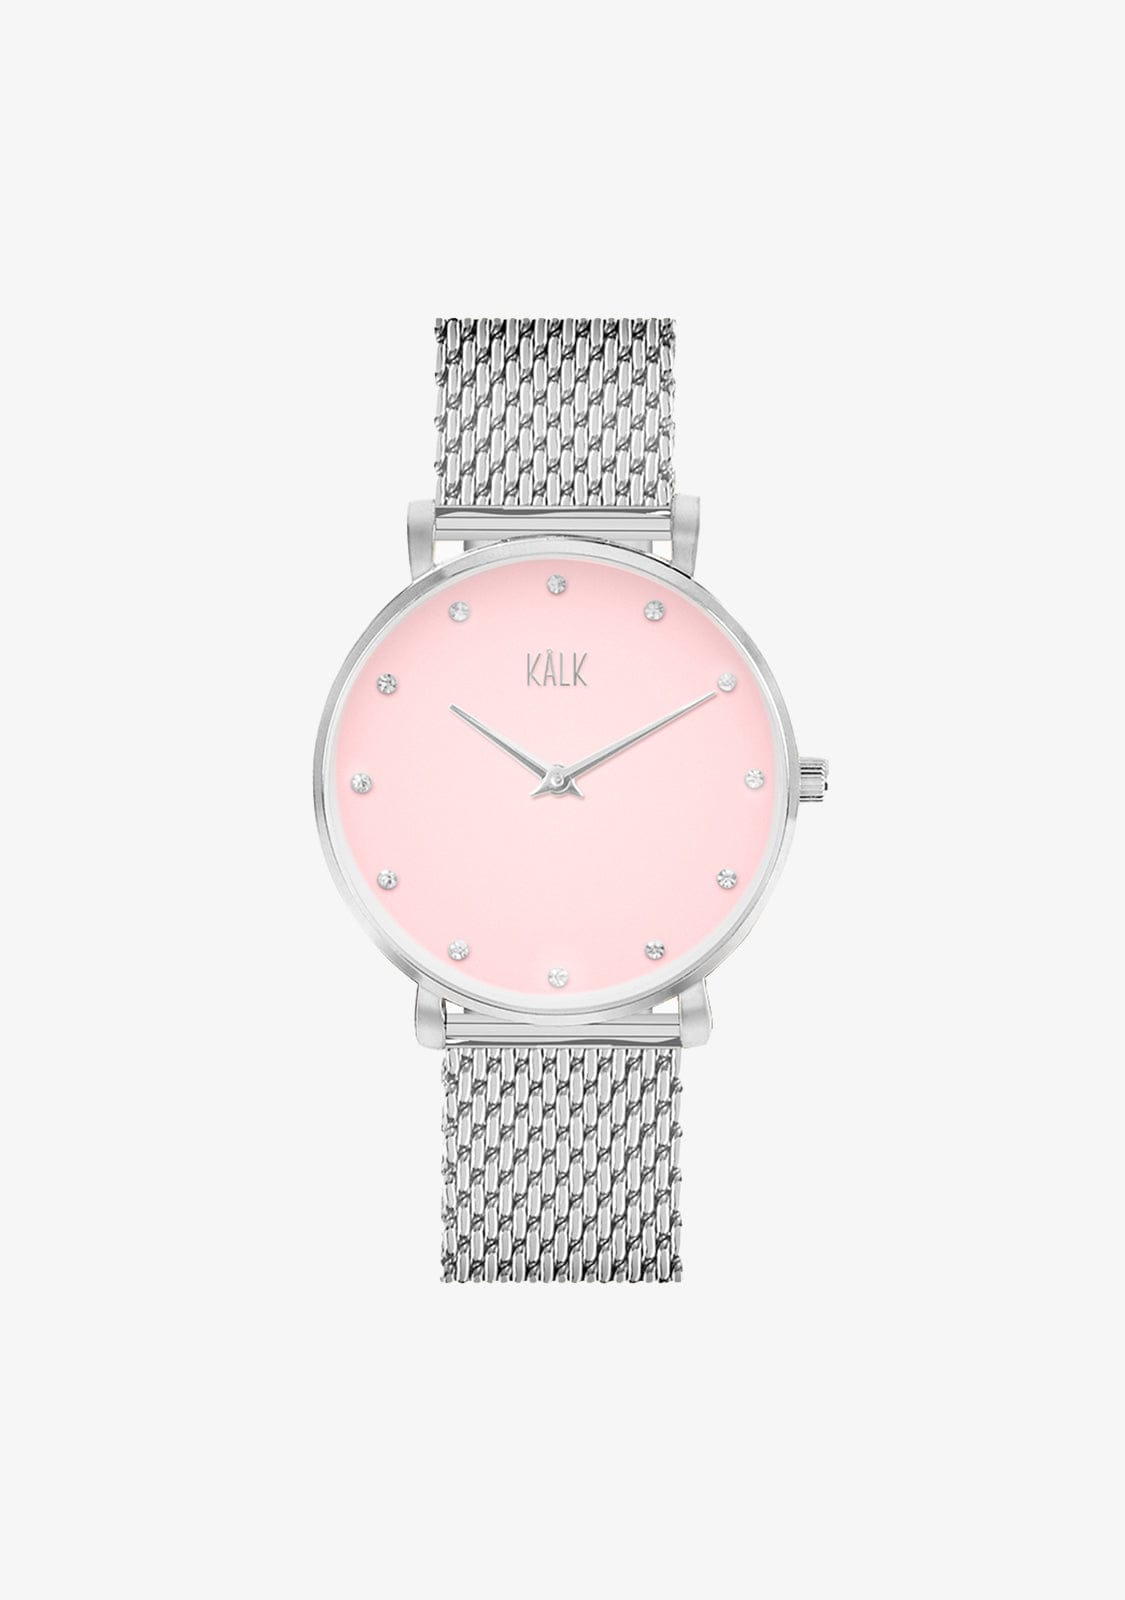 Dreamy Silver / Light Pink Watch